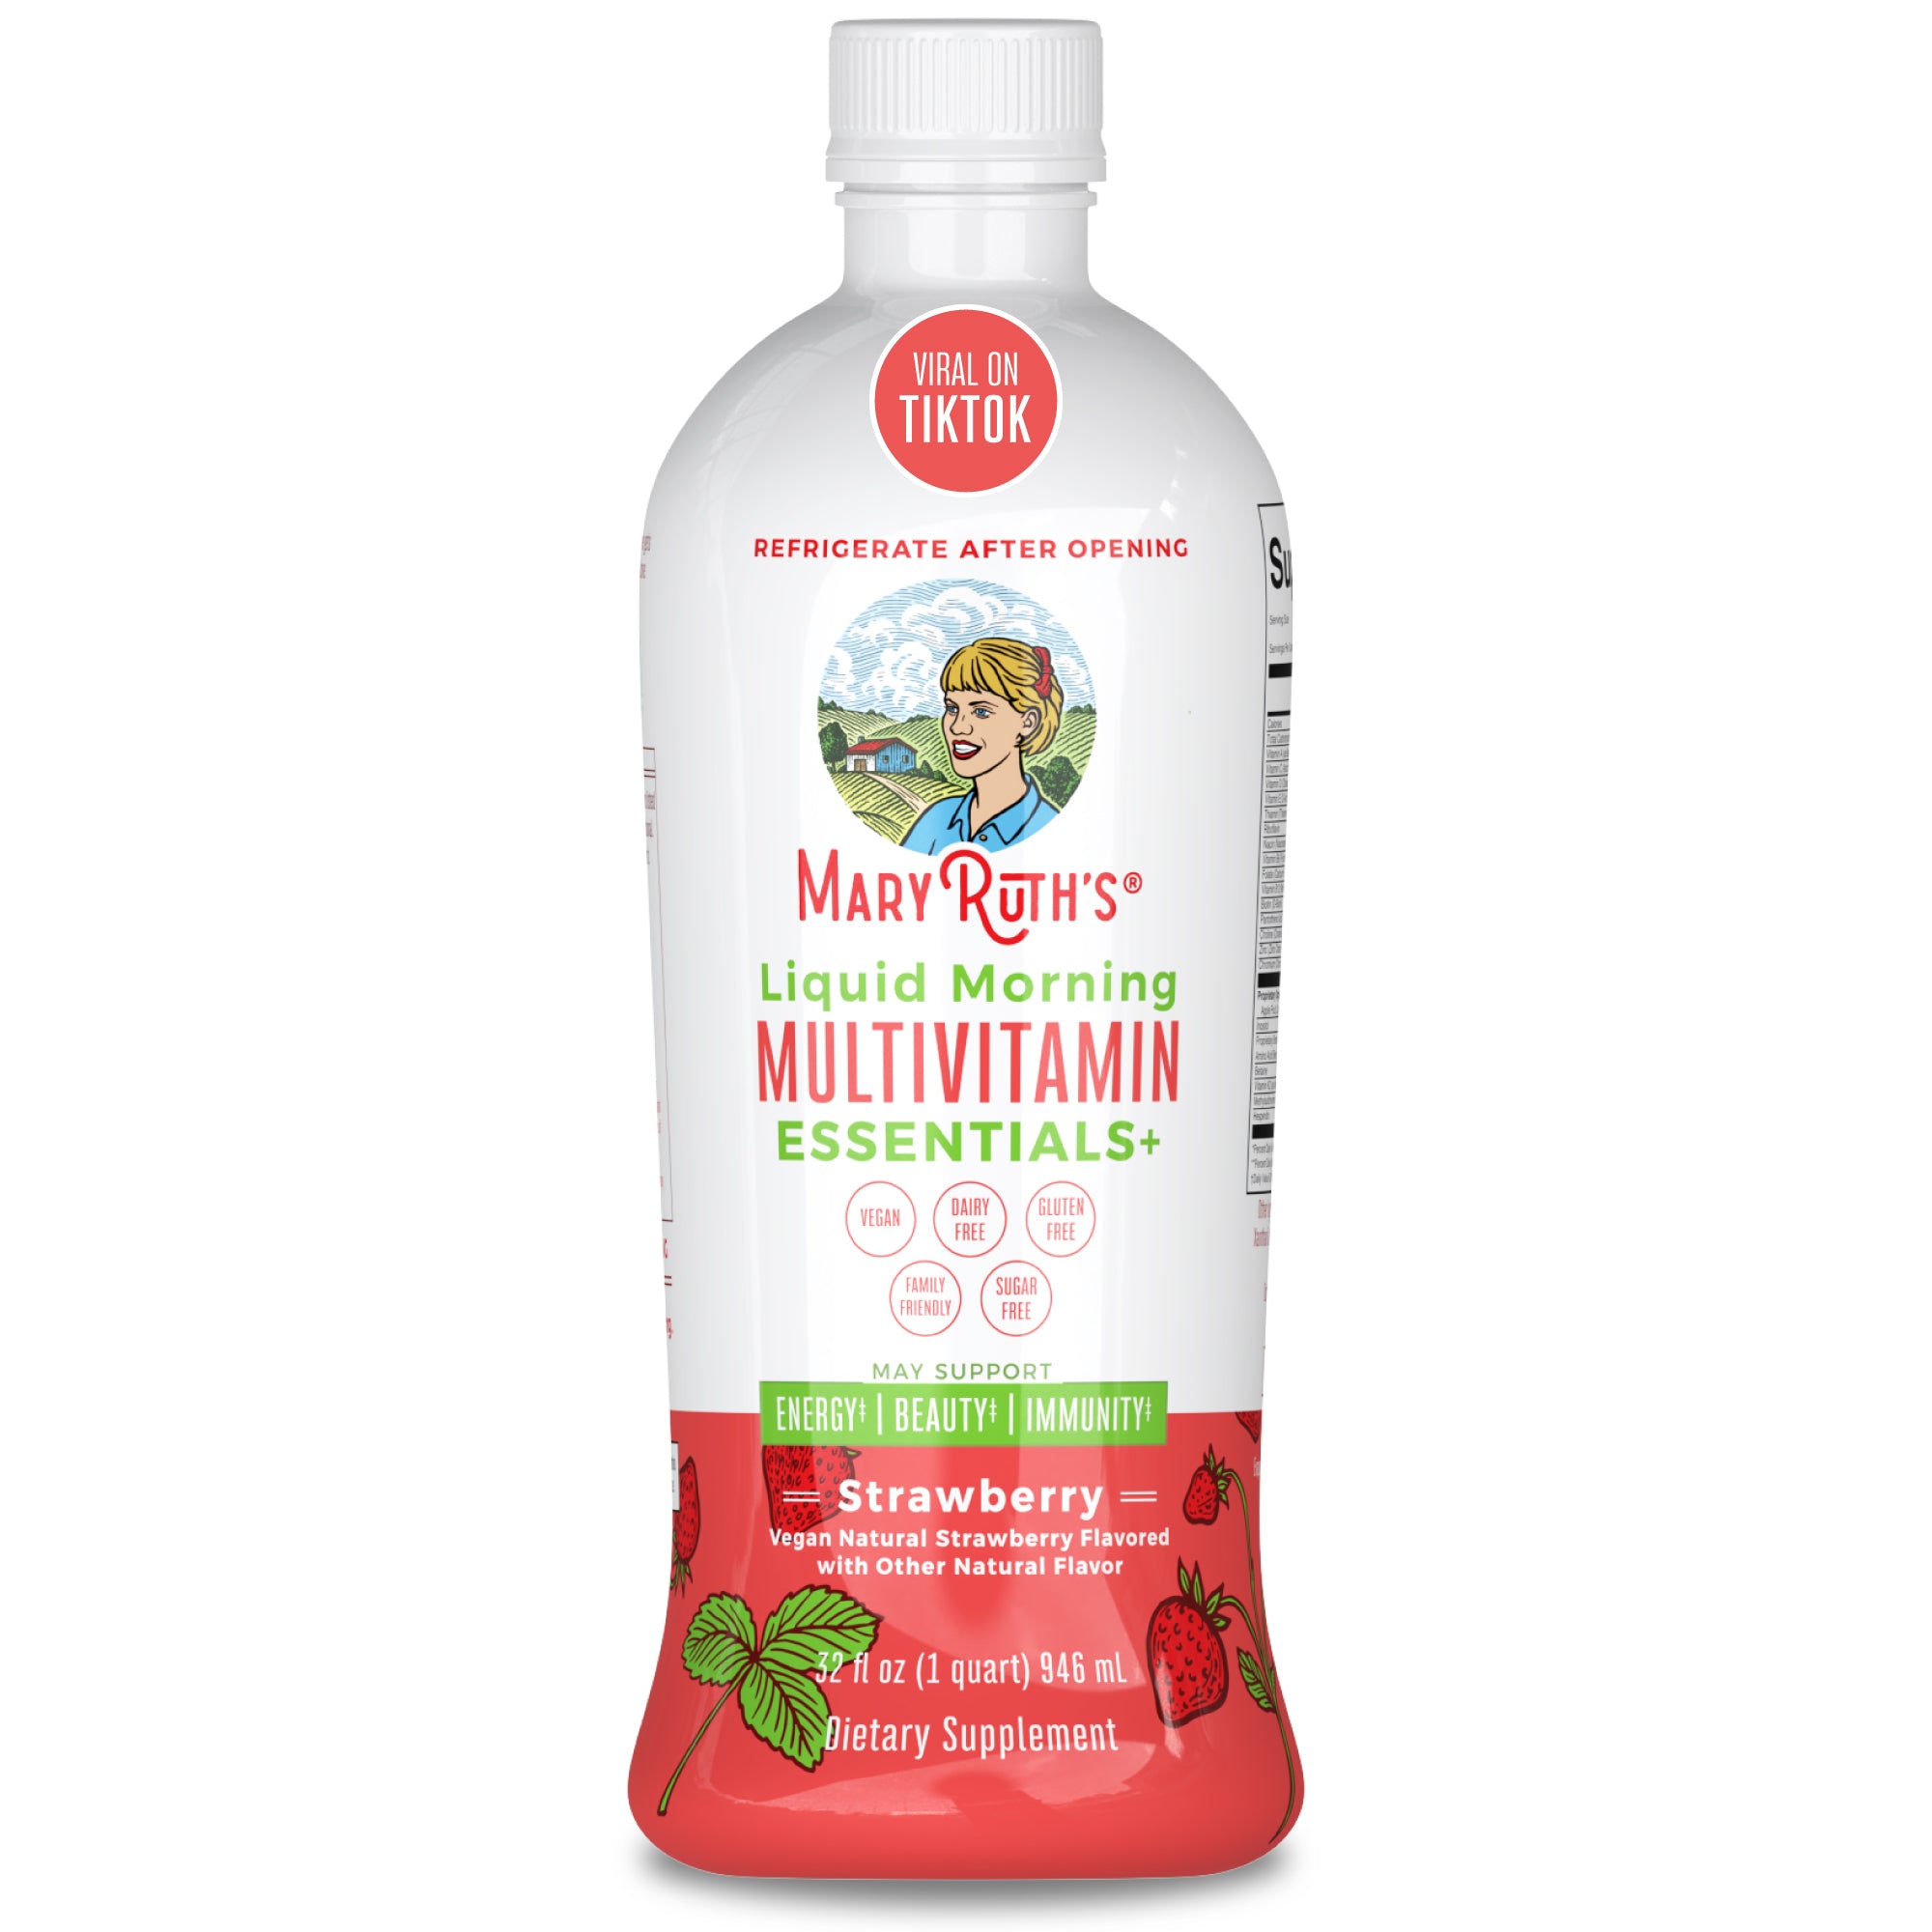 MaryRuth Liquid Morning Multivitamin Essentials+ Strawberry Flavor Product Image Bottle + 